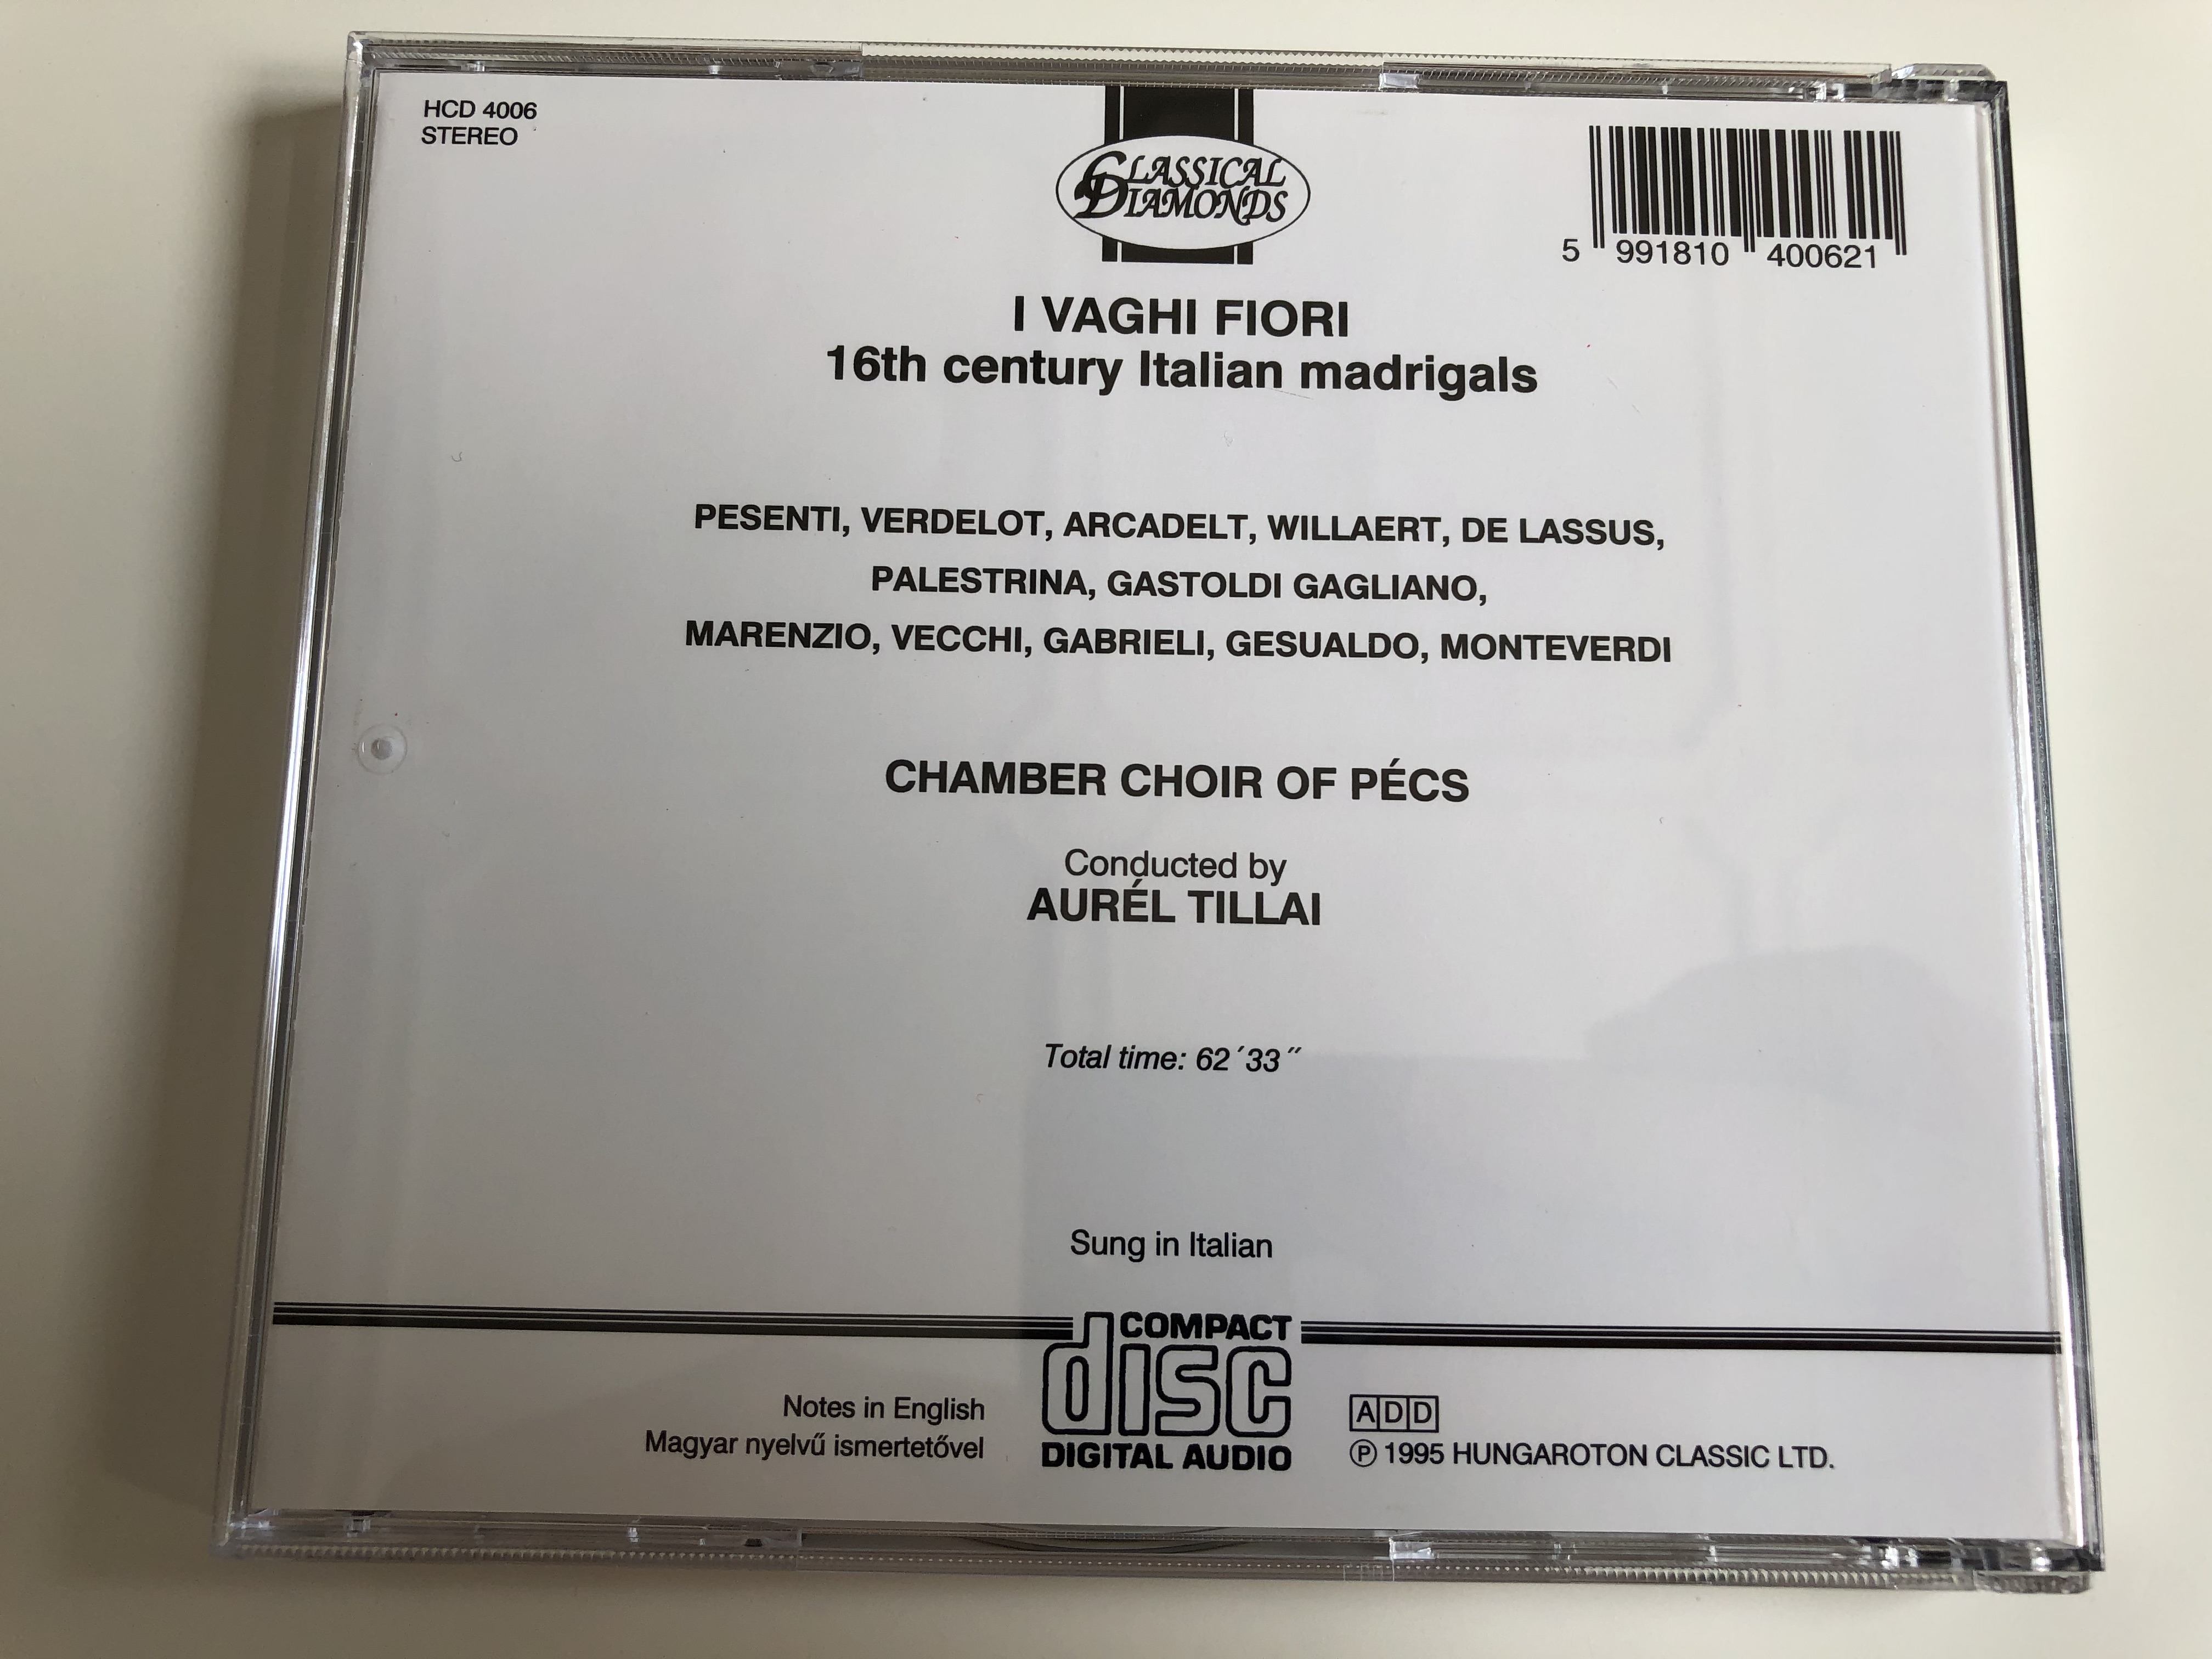 i-vaghi-fiori-madrigals-by-arcadelt-lassus-gastoldi-gabrieli-gesualdo-monteverdi-chamber-choir-of-p-cs-conducted-by-aur-l-tillai-hcd-4006-classical-diamonds-audio-cd-1995-7-.jpg